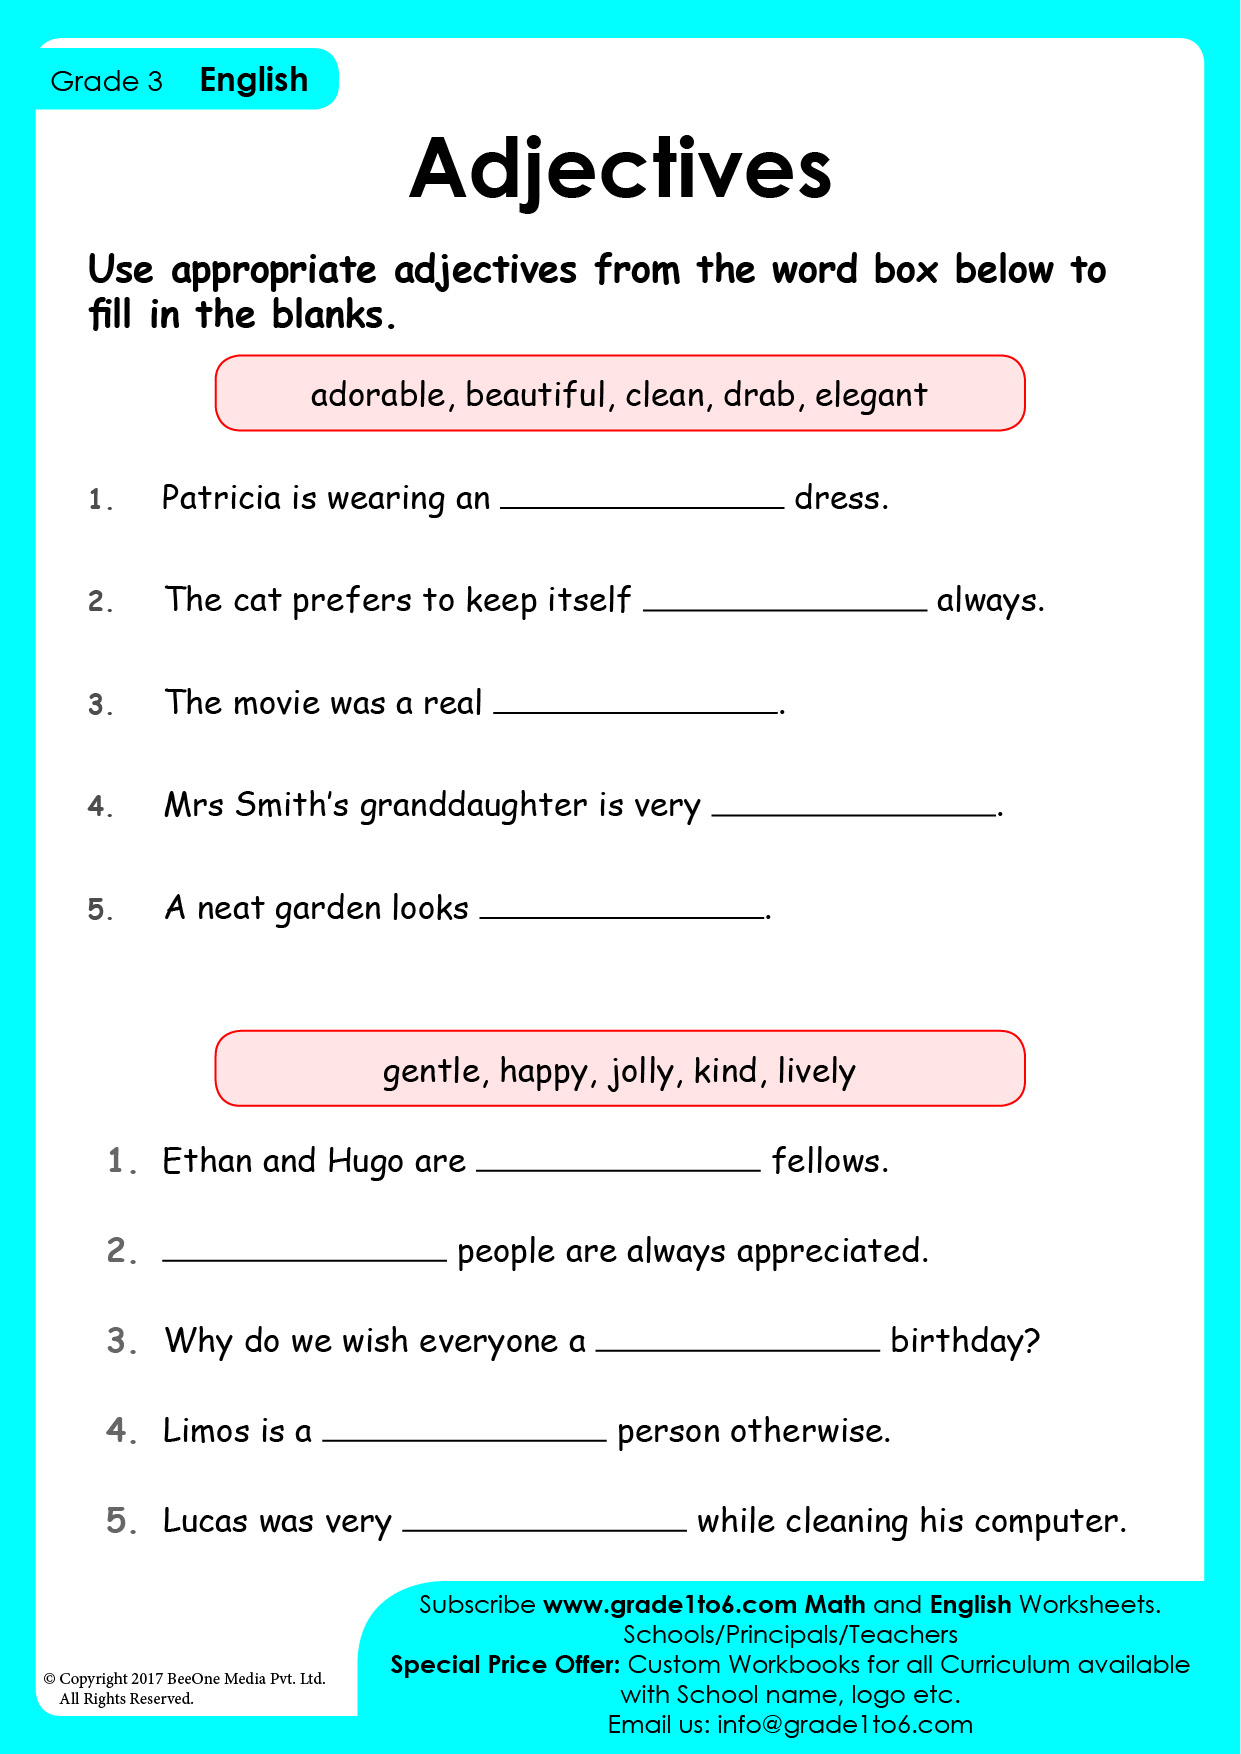 class-3-adjectives-worksheet-grade1to6